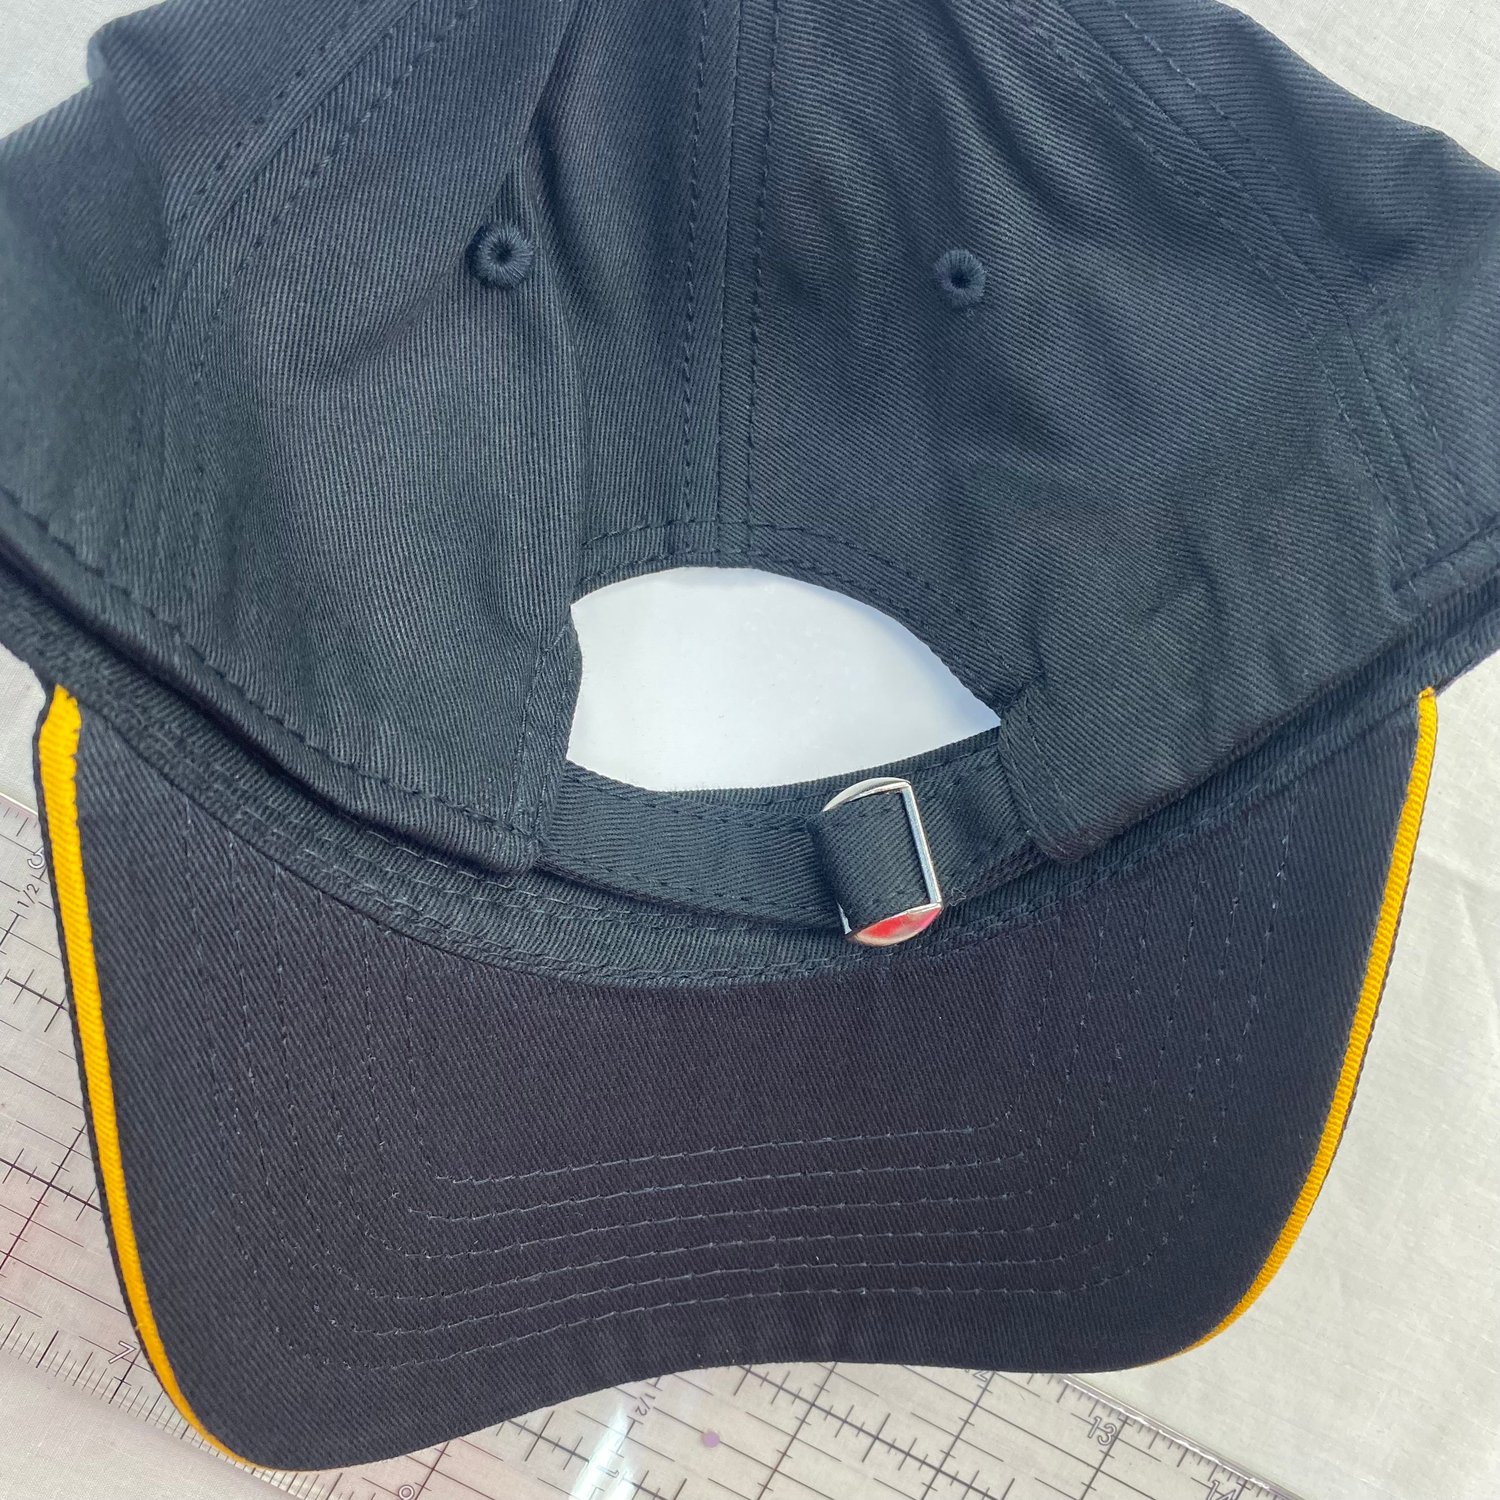 Image of Autozone Duralast Gold Adjustable  Black Adult Cap Hat New